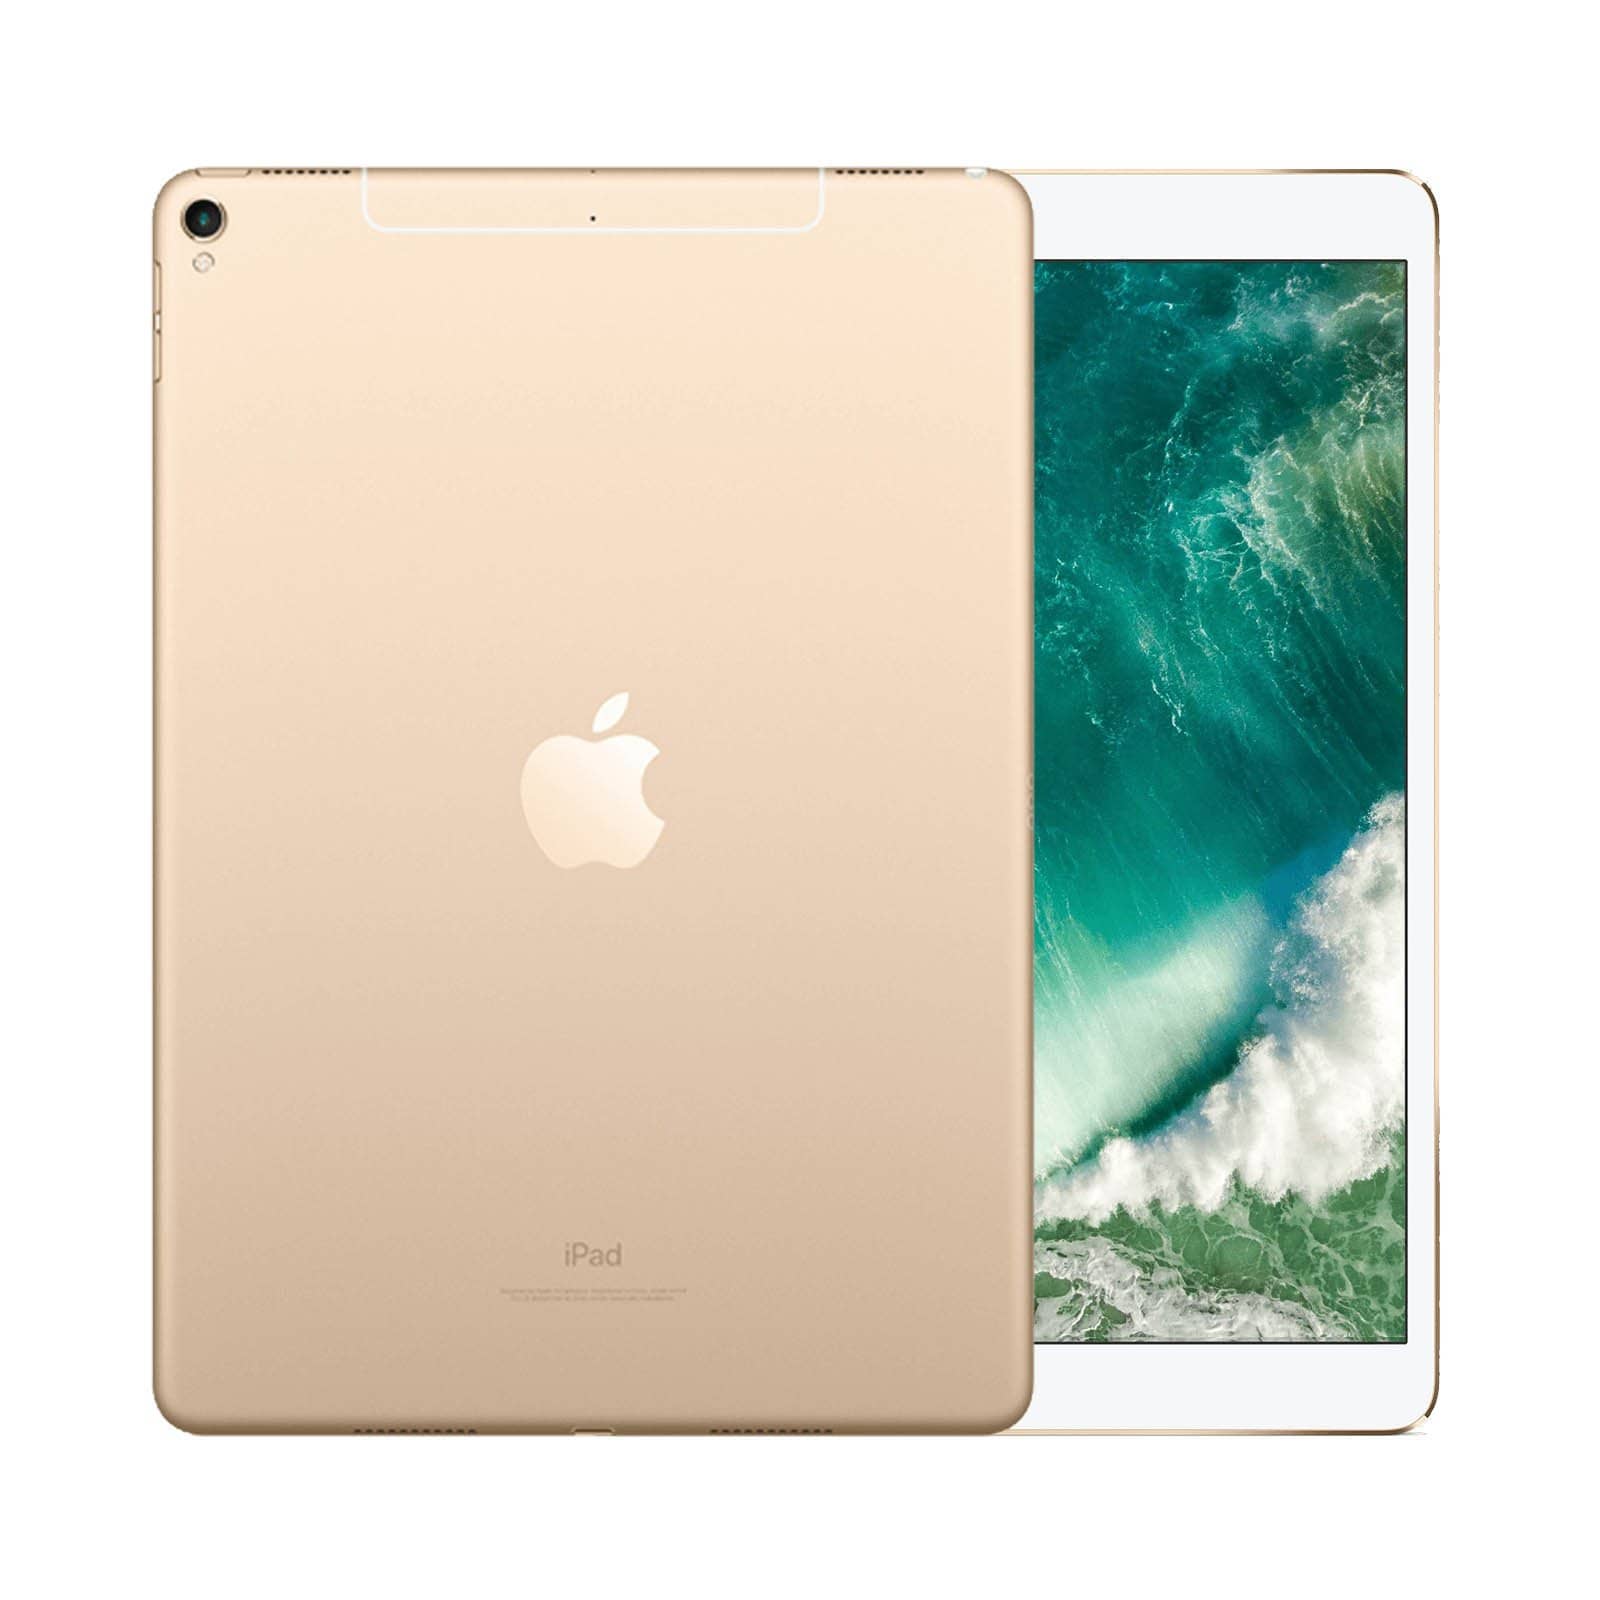 iPad Pro 10.5 Inch 64GB Gold Good - Unlocked 64GB Gold Good